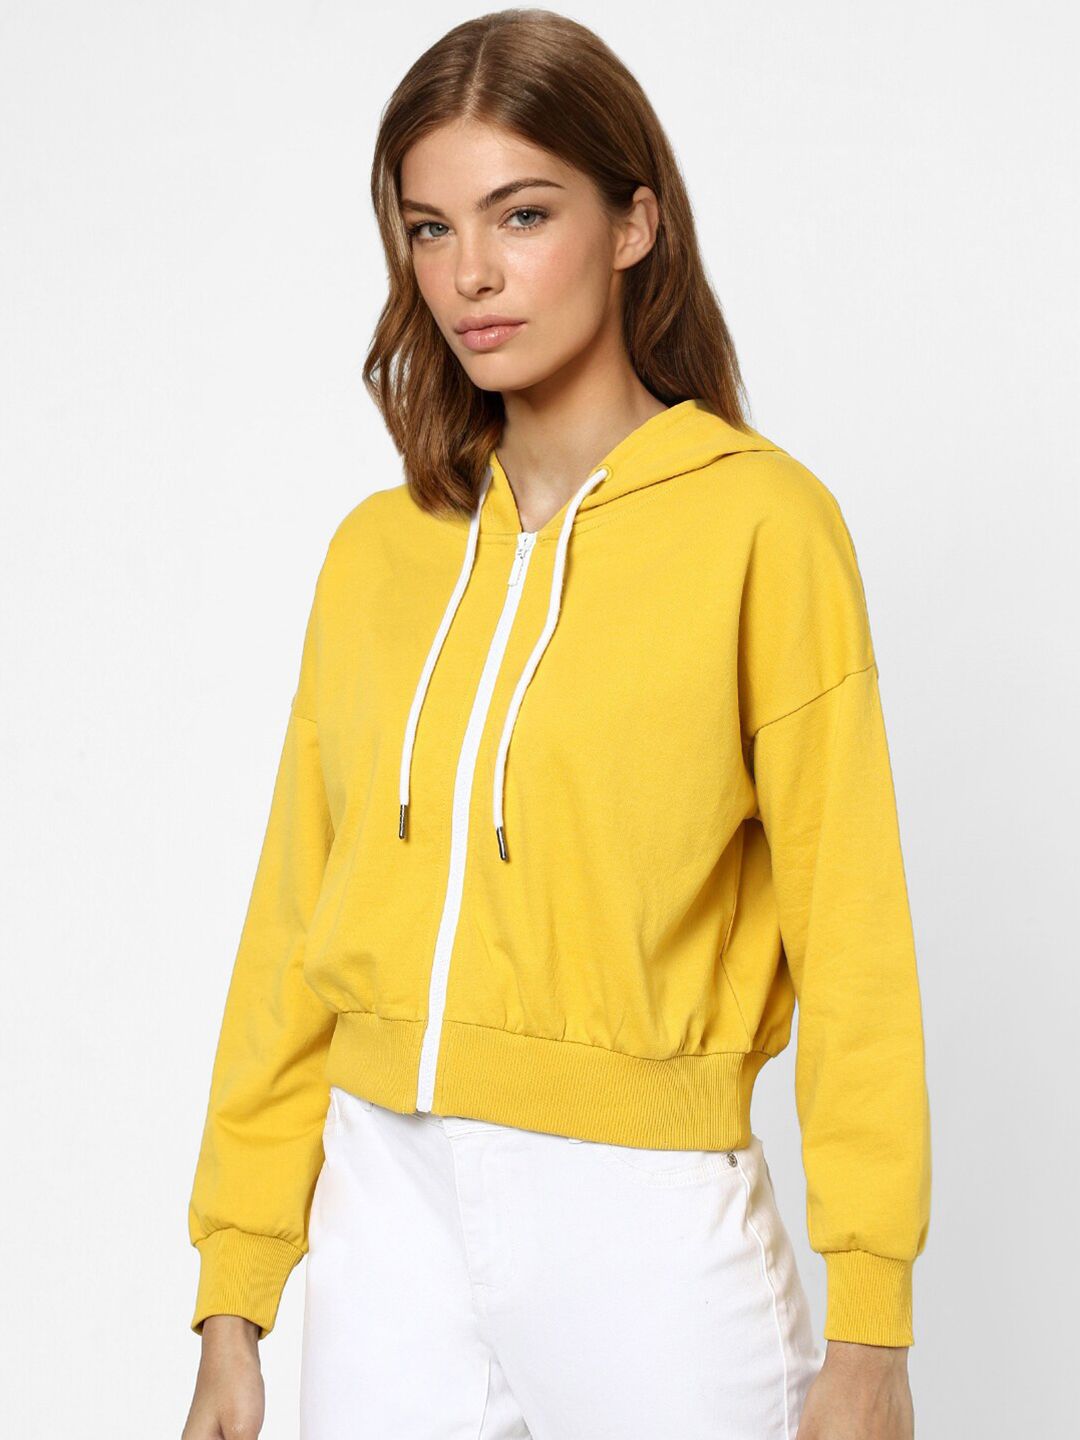 ONLY Women Yellow Hooded Sweatshirt Price in India